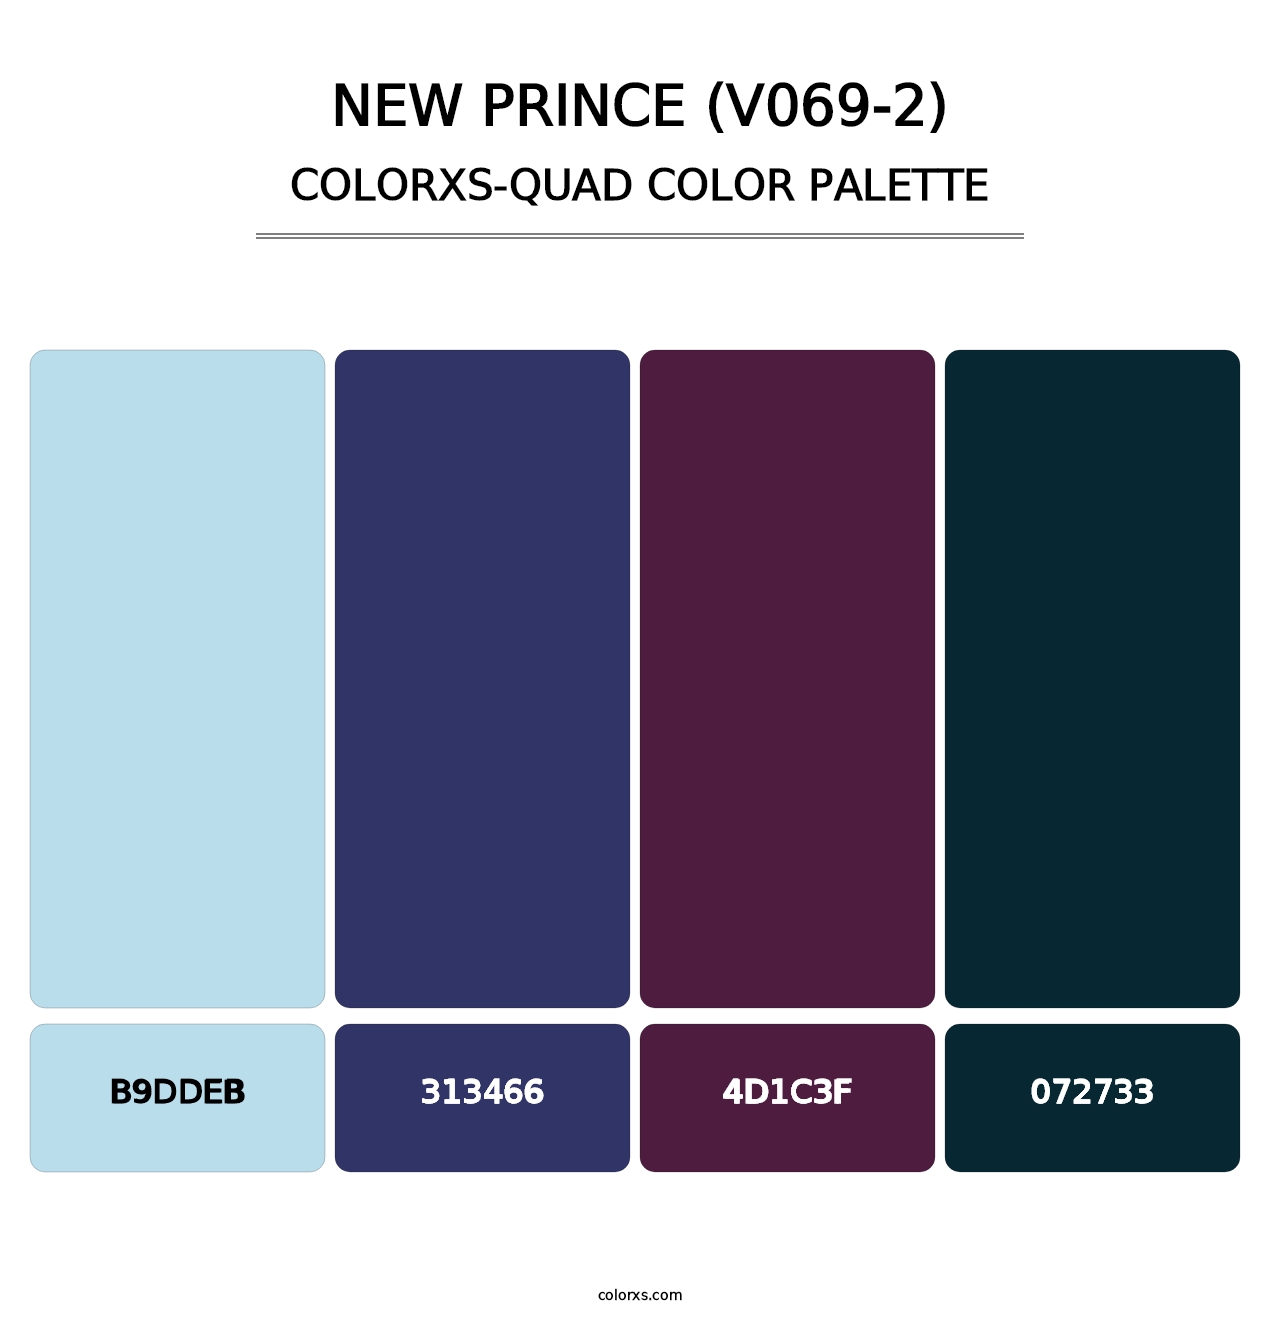 New Prince (V069-2) - Colorxs Quad Palette